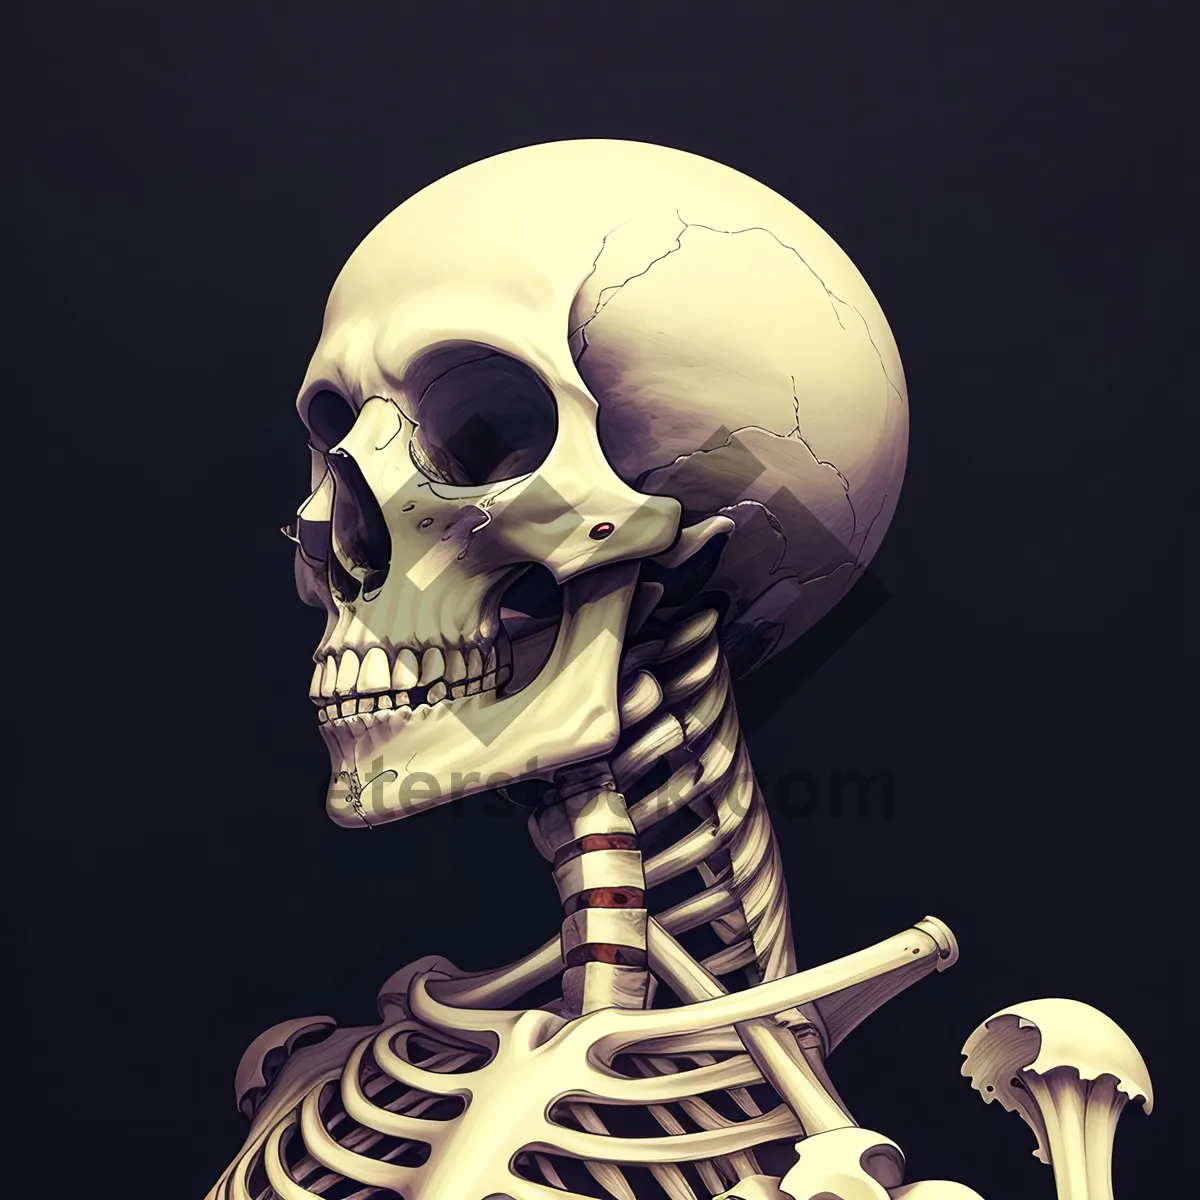 Picture of Spooky Skull Sculpture - Frightening Anatomy in Plastic Art